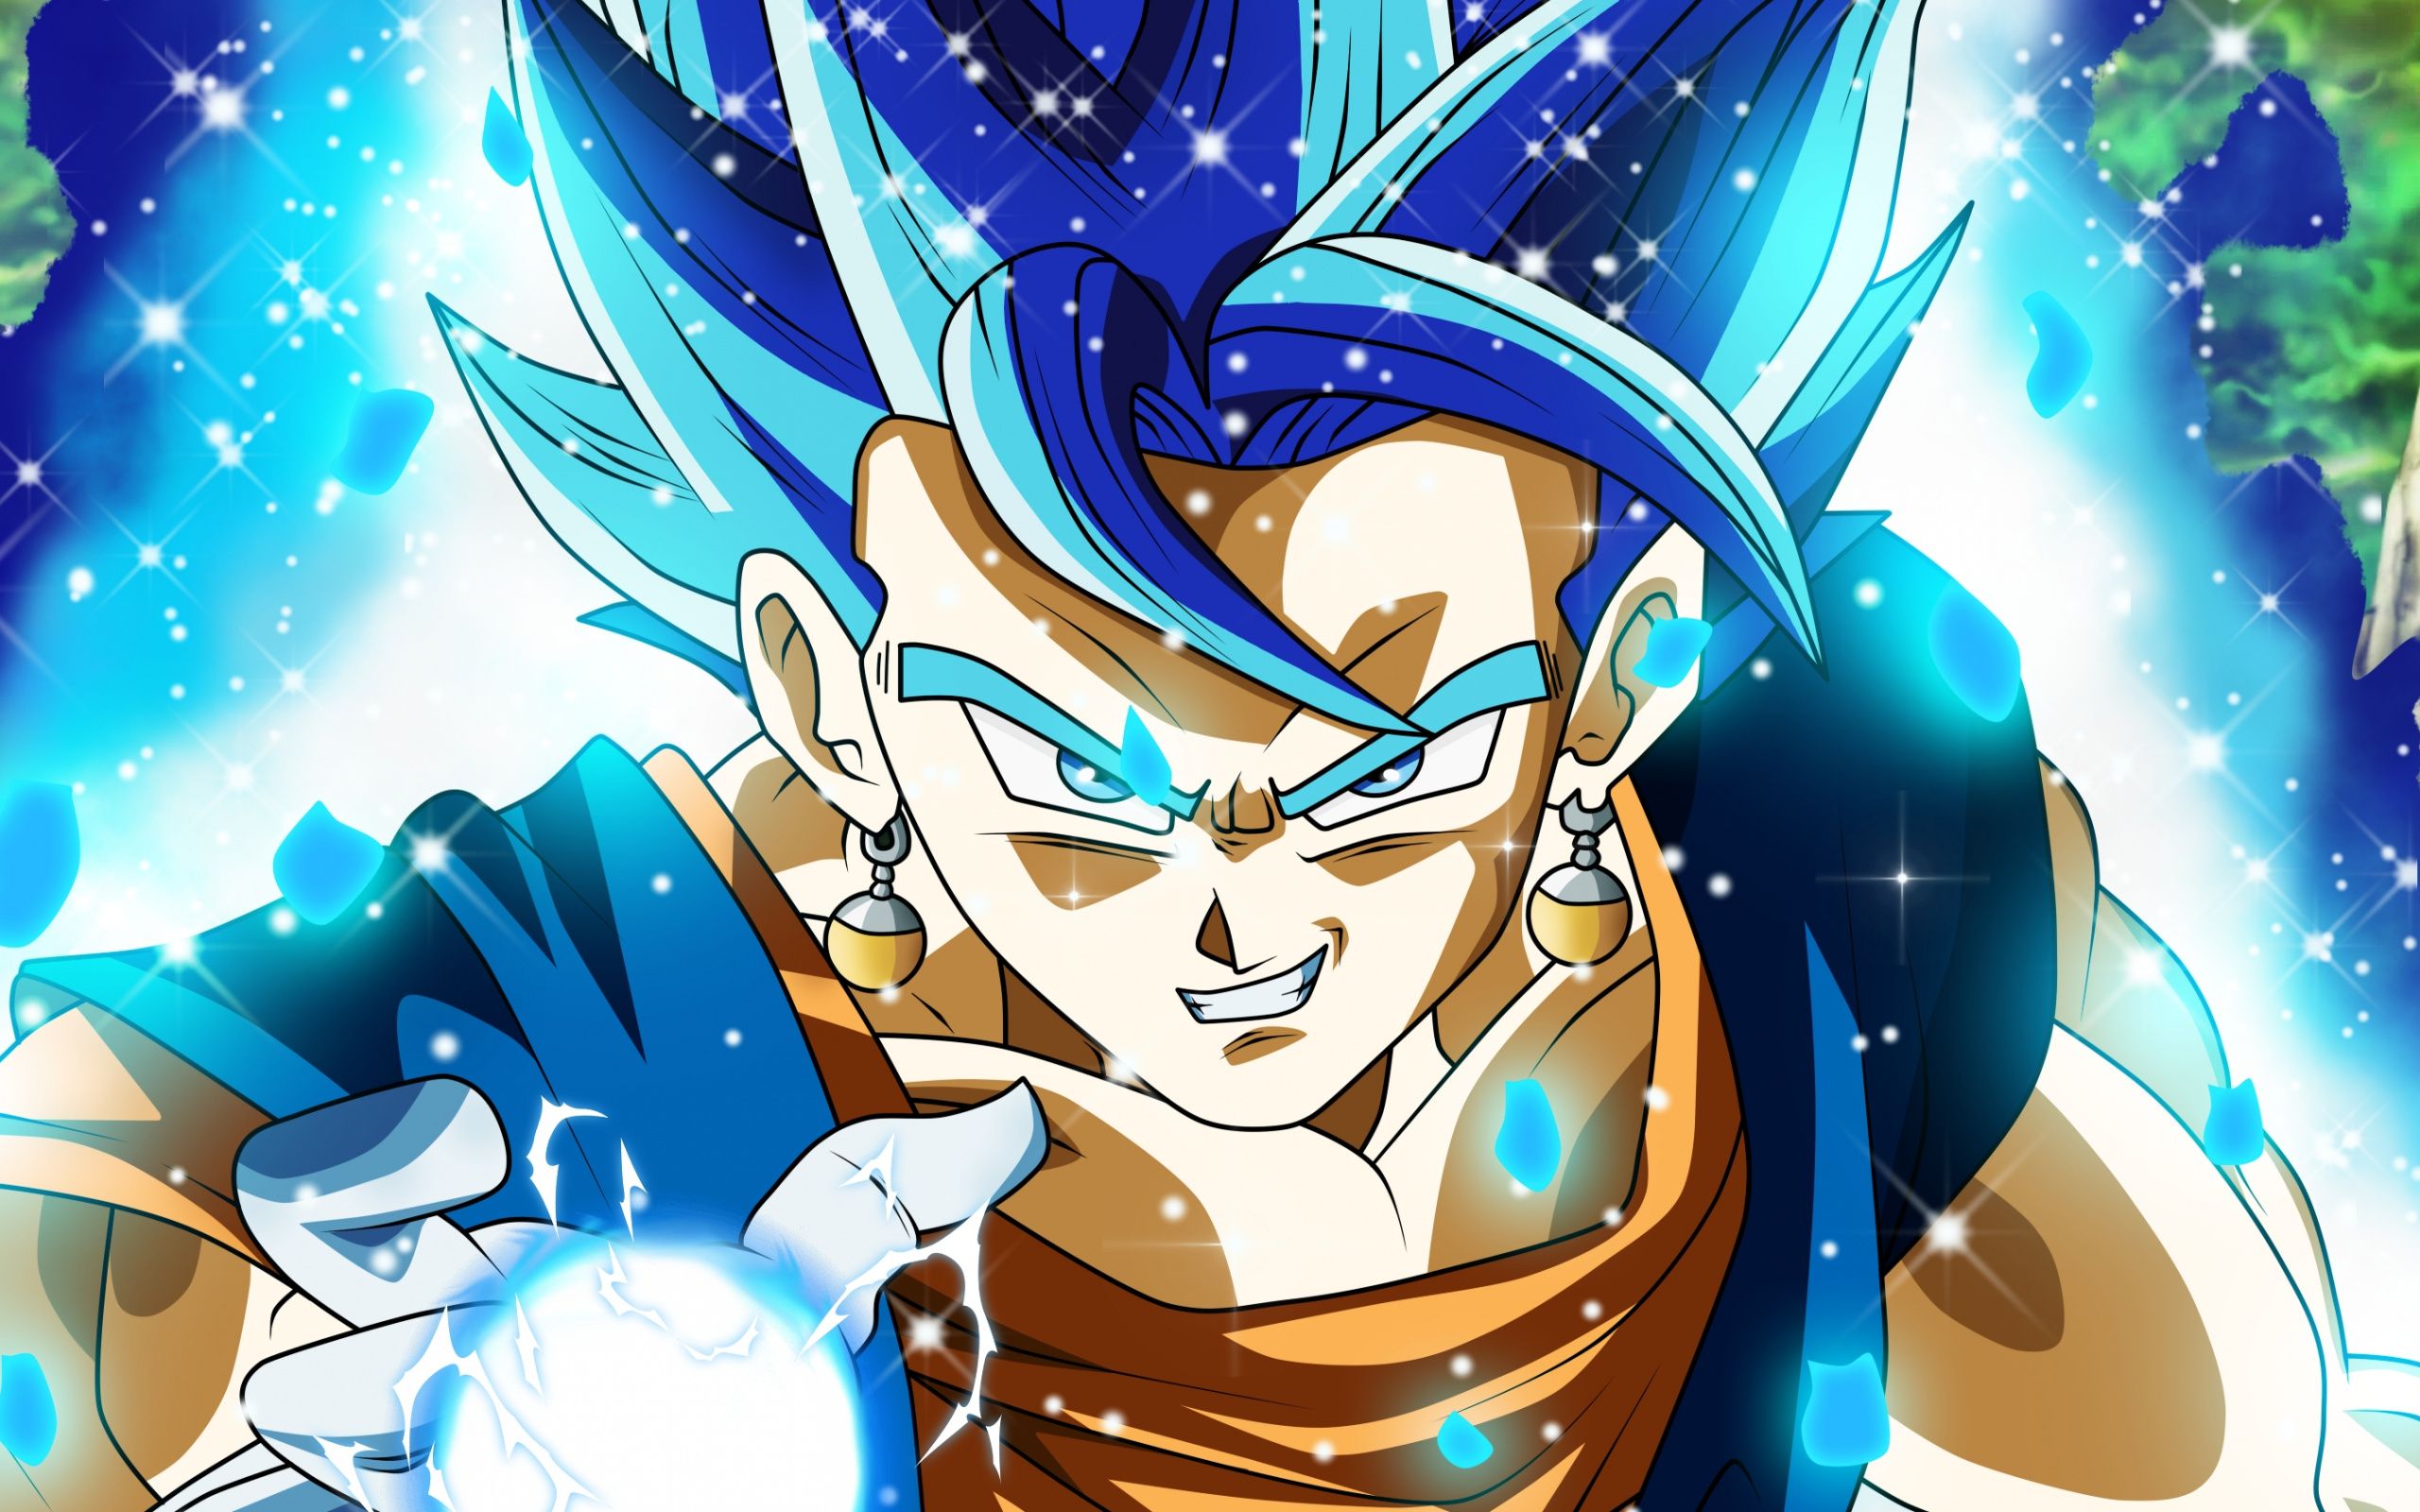 Download Full power, Goku, Dragon ball super, anime wallpaper